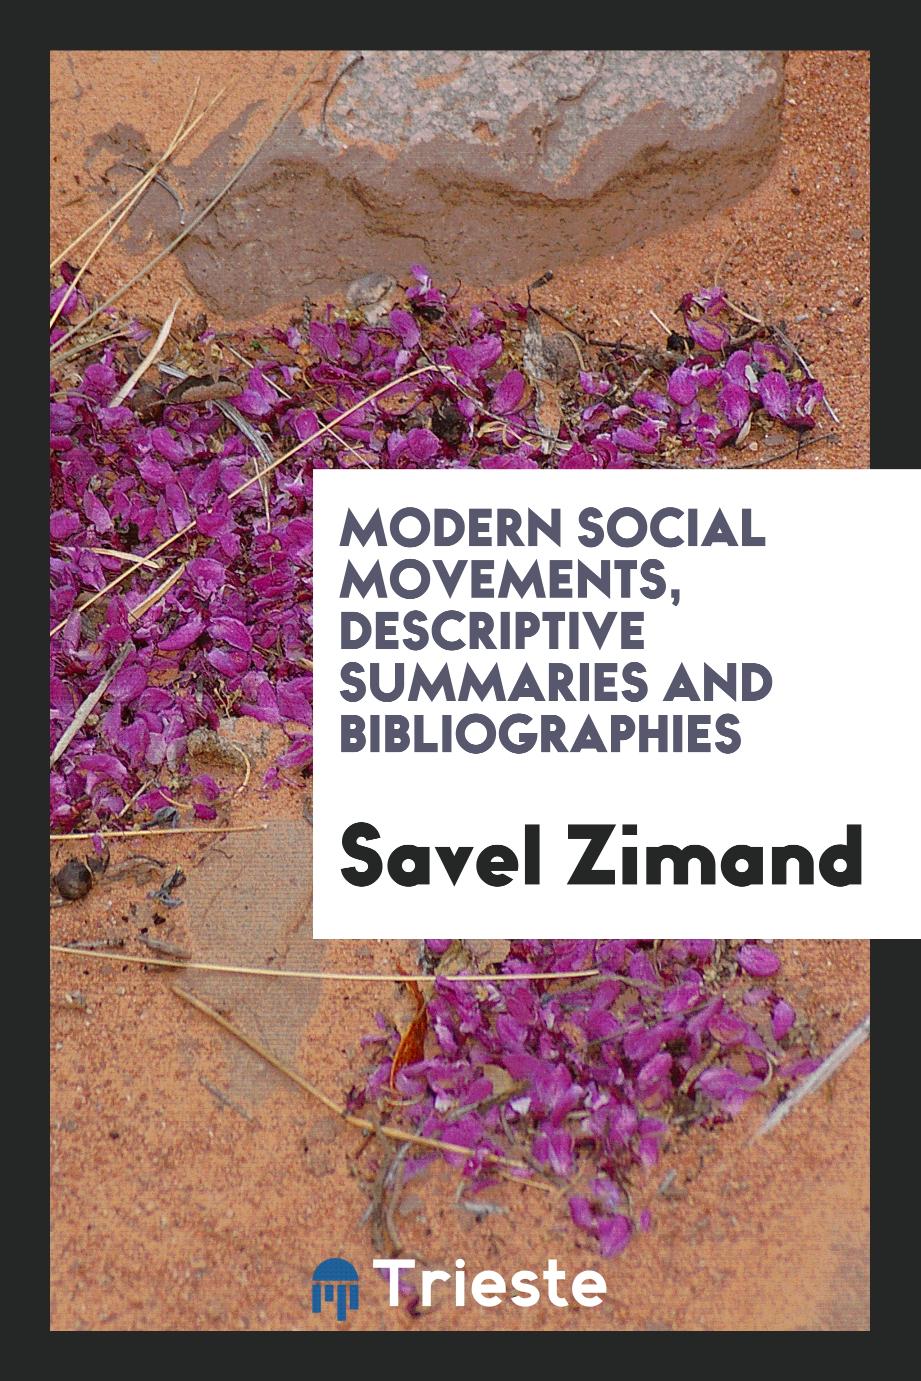 Modern social movements, descriptive summaries and bibliographies